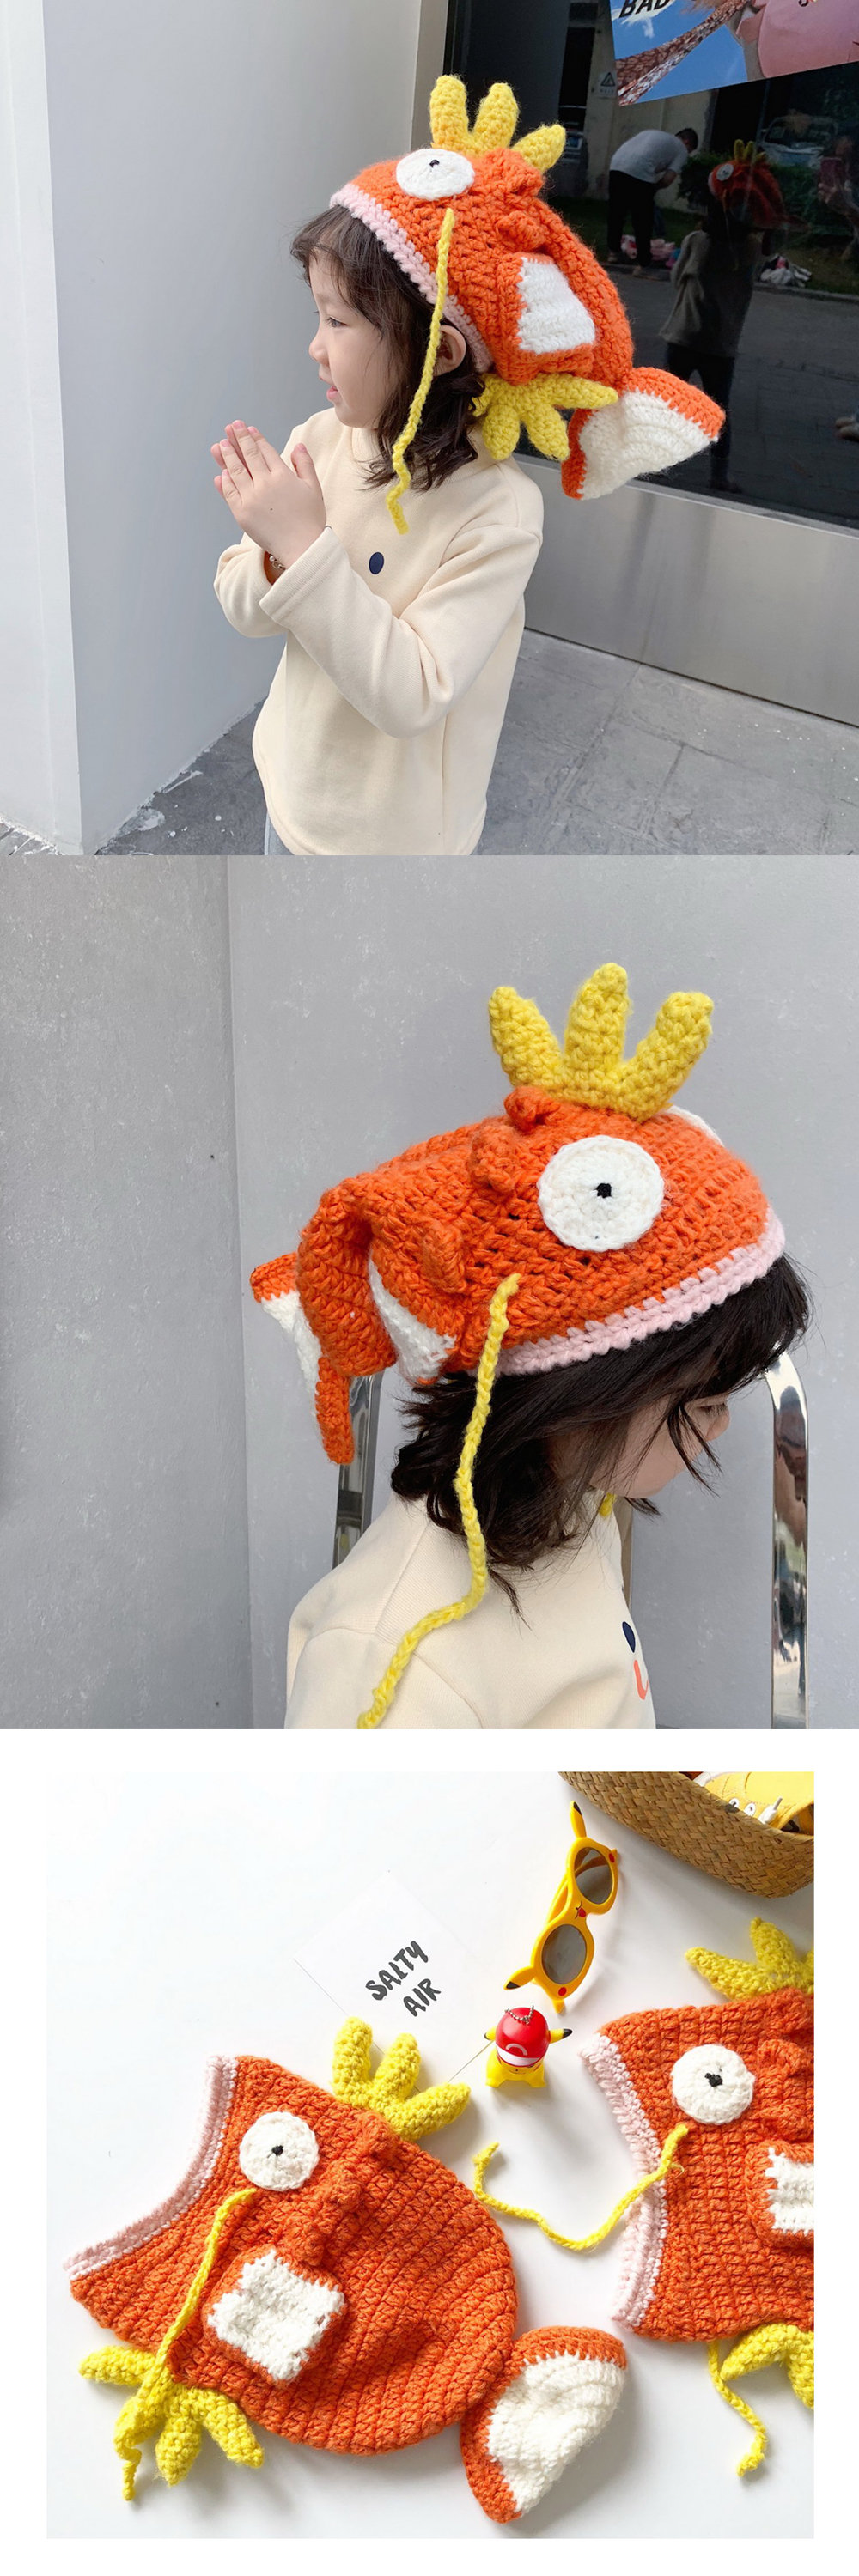 Kavitoz® Children's Fishing Hat Cartoon Print Hat Sun Hat Cute